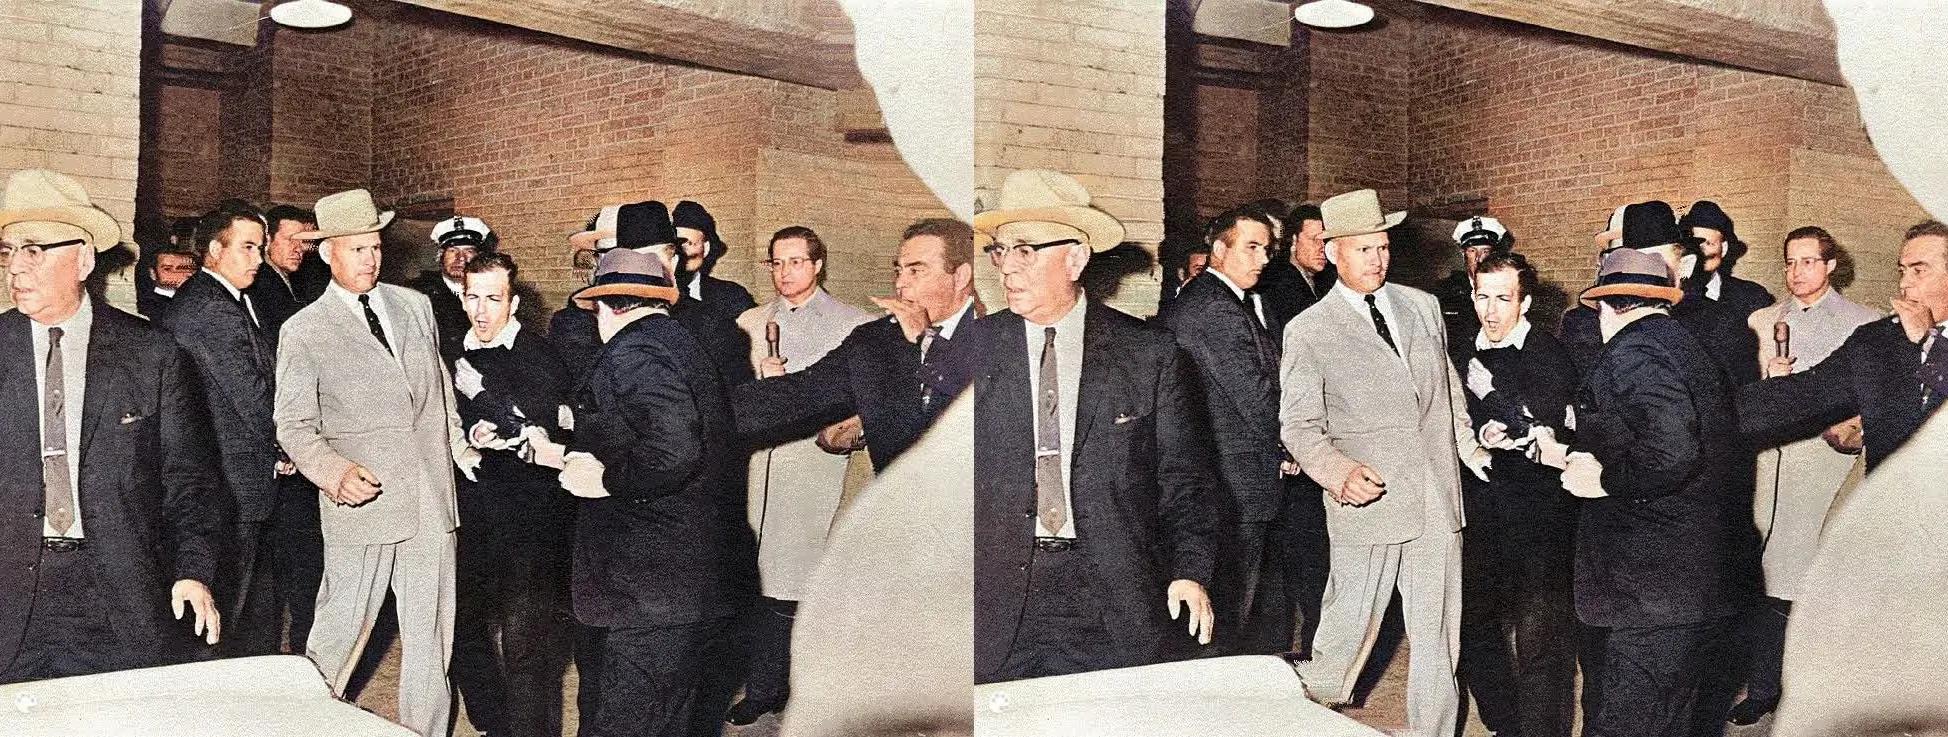 LeeHarvey Oswald being Shot.